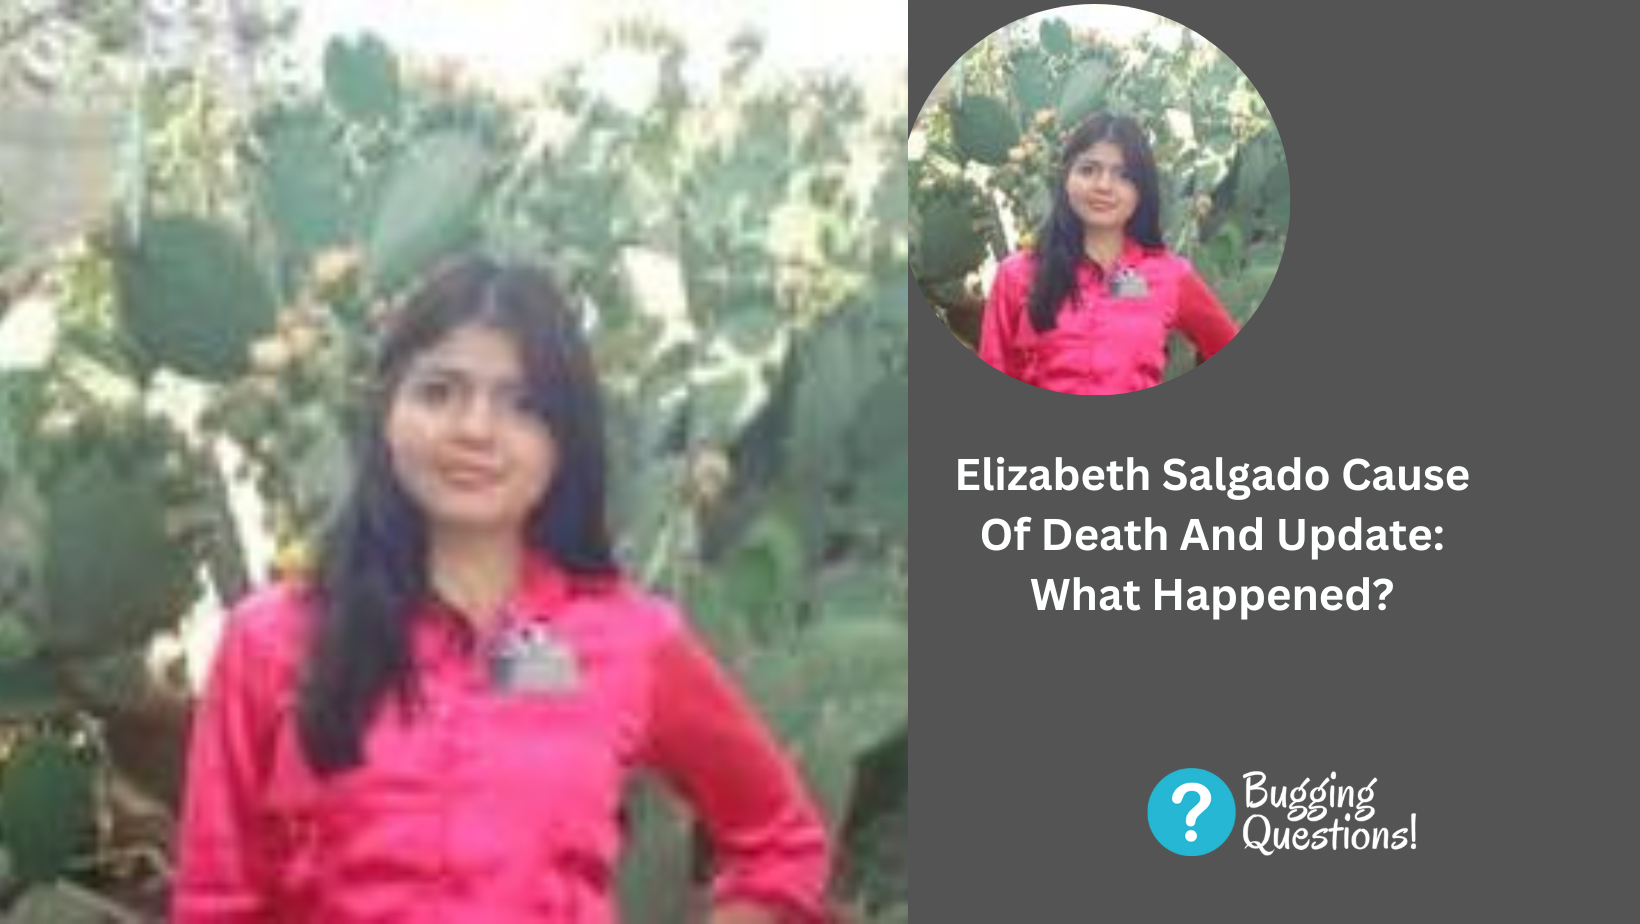 Elizabeth Salgado Cause Of Death And Update: What Happened?